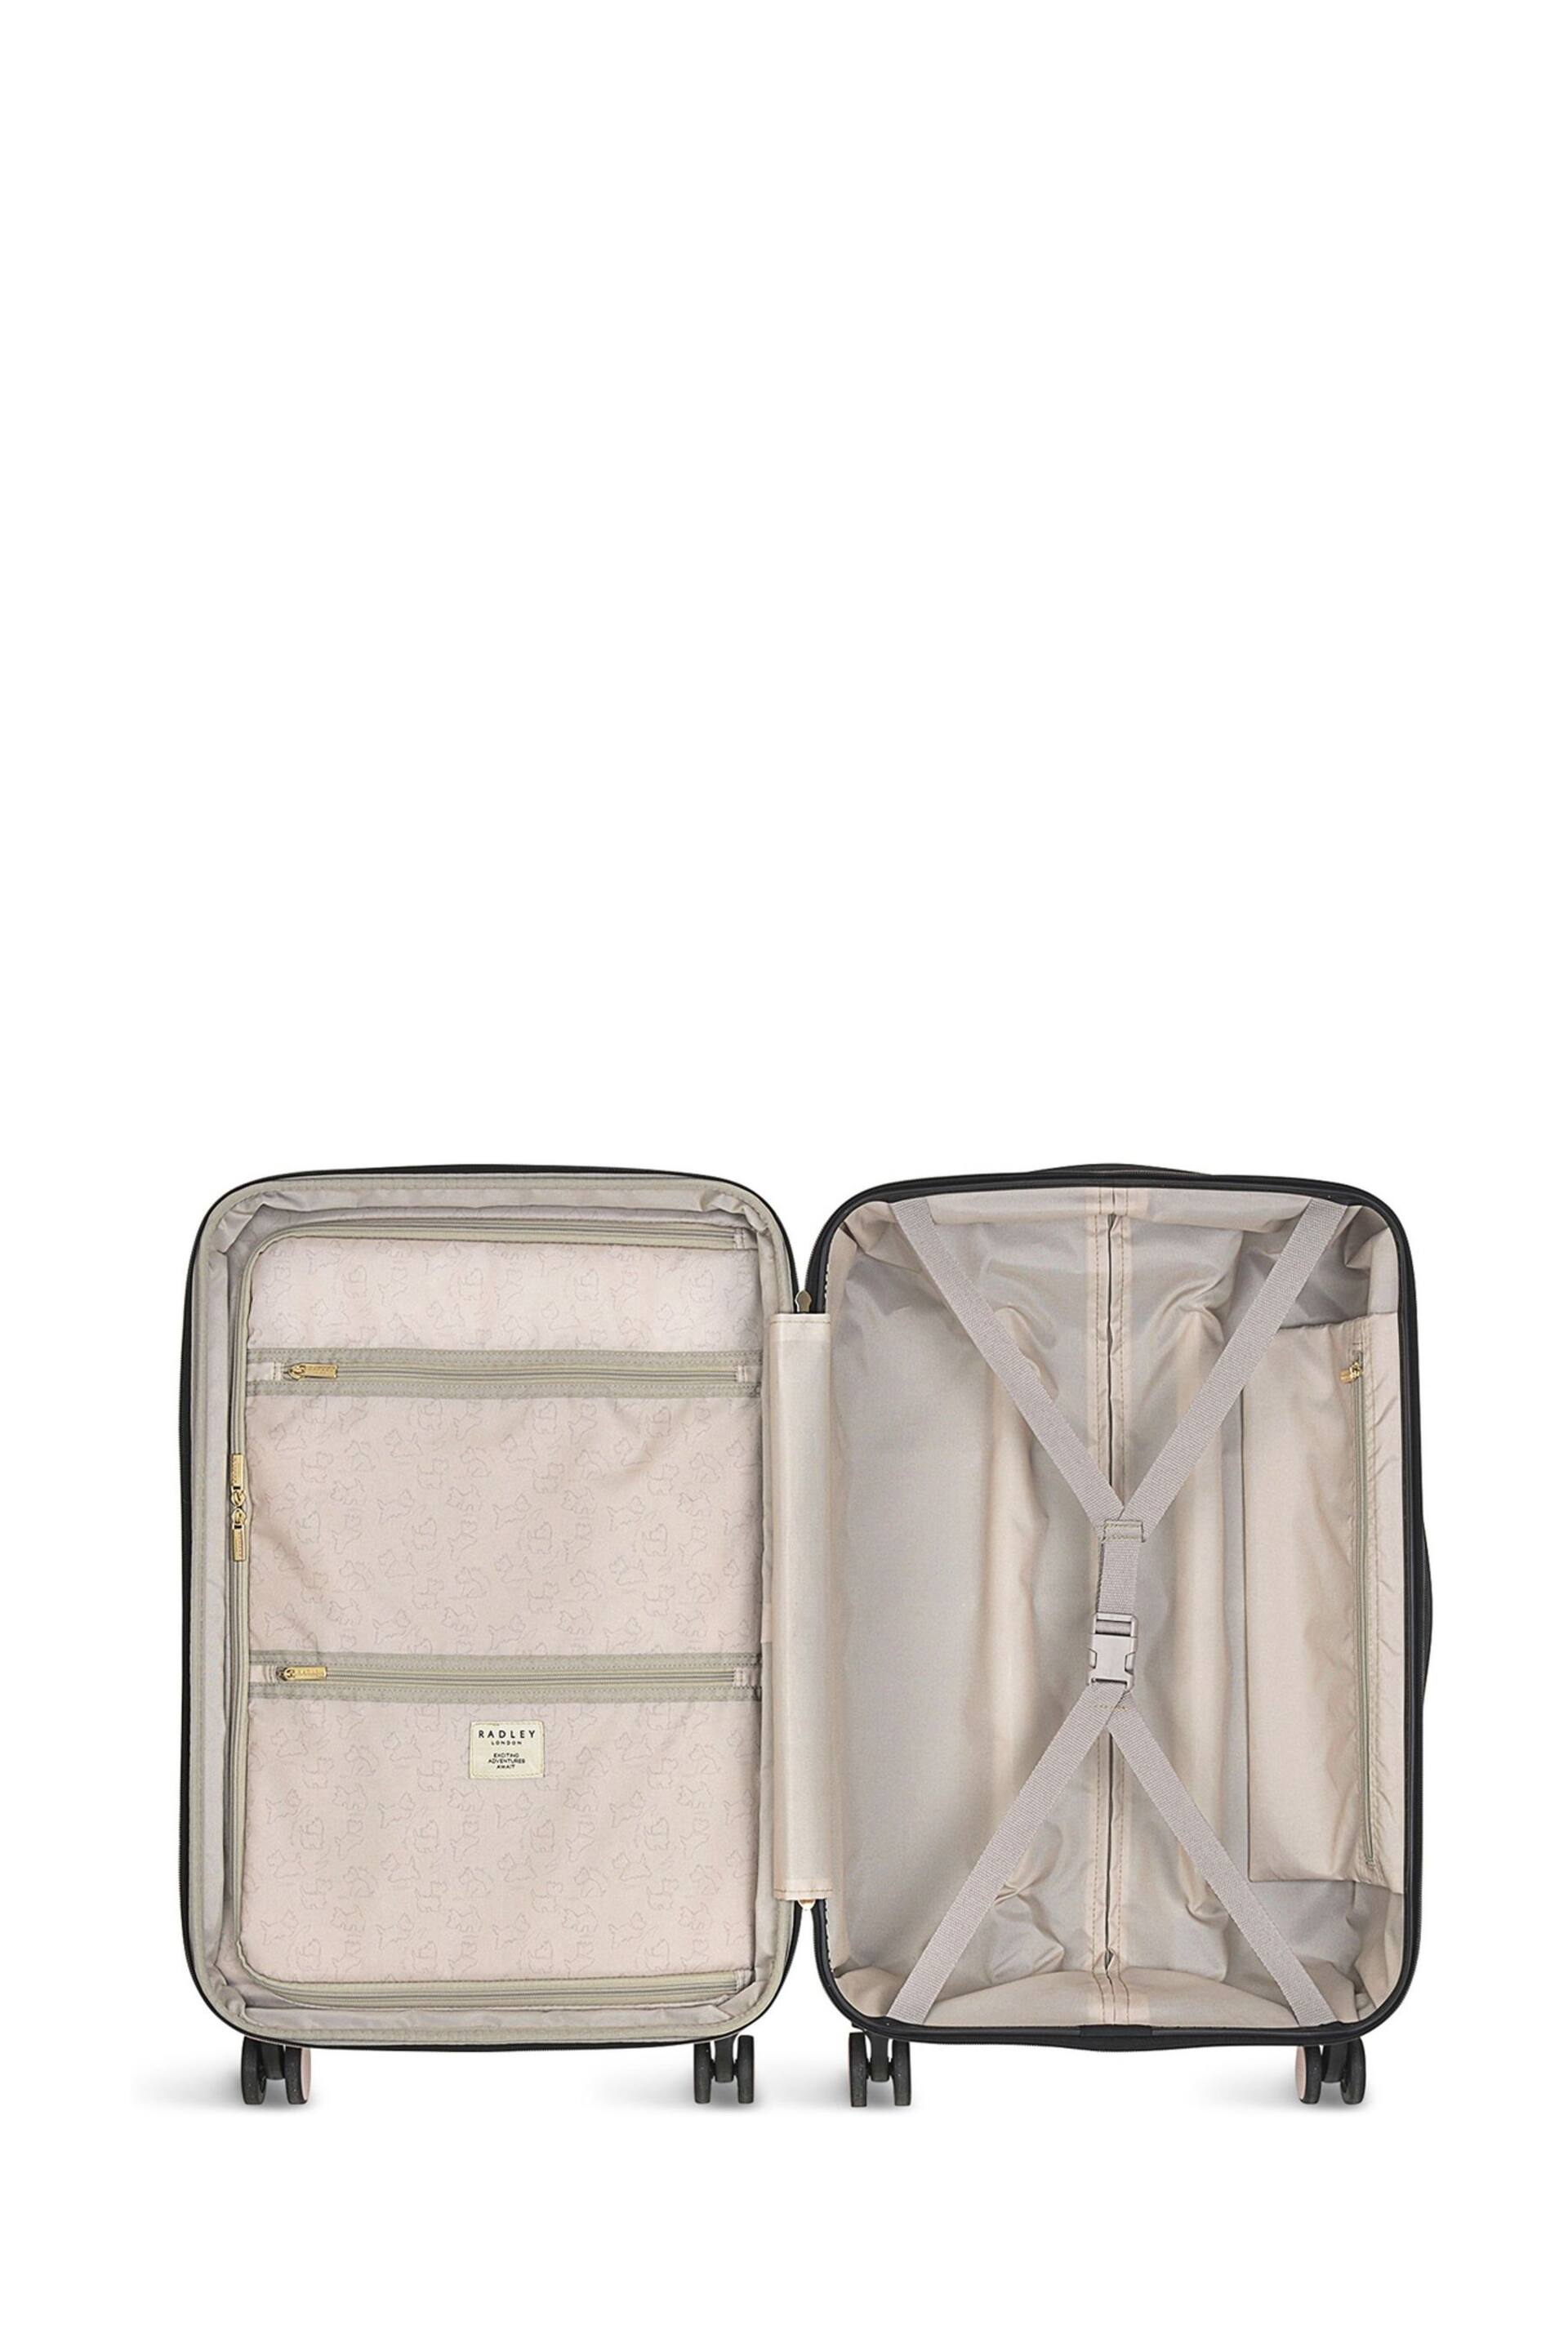 Radley London Medium Lexington 4 Wheel Suitcase - Image 4 of 5